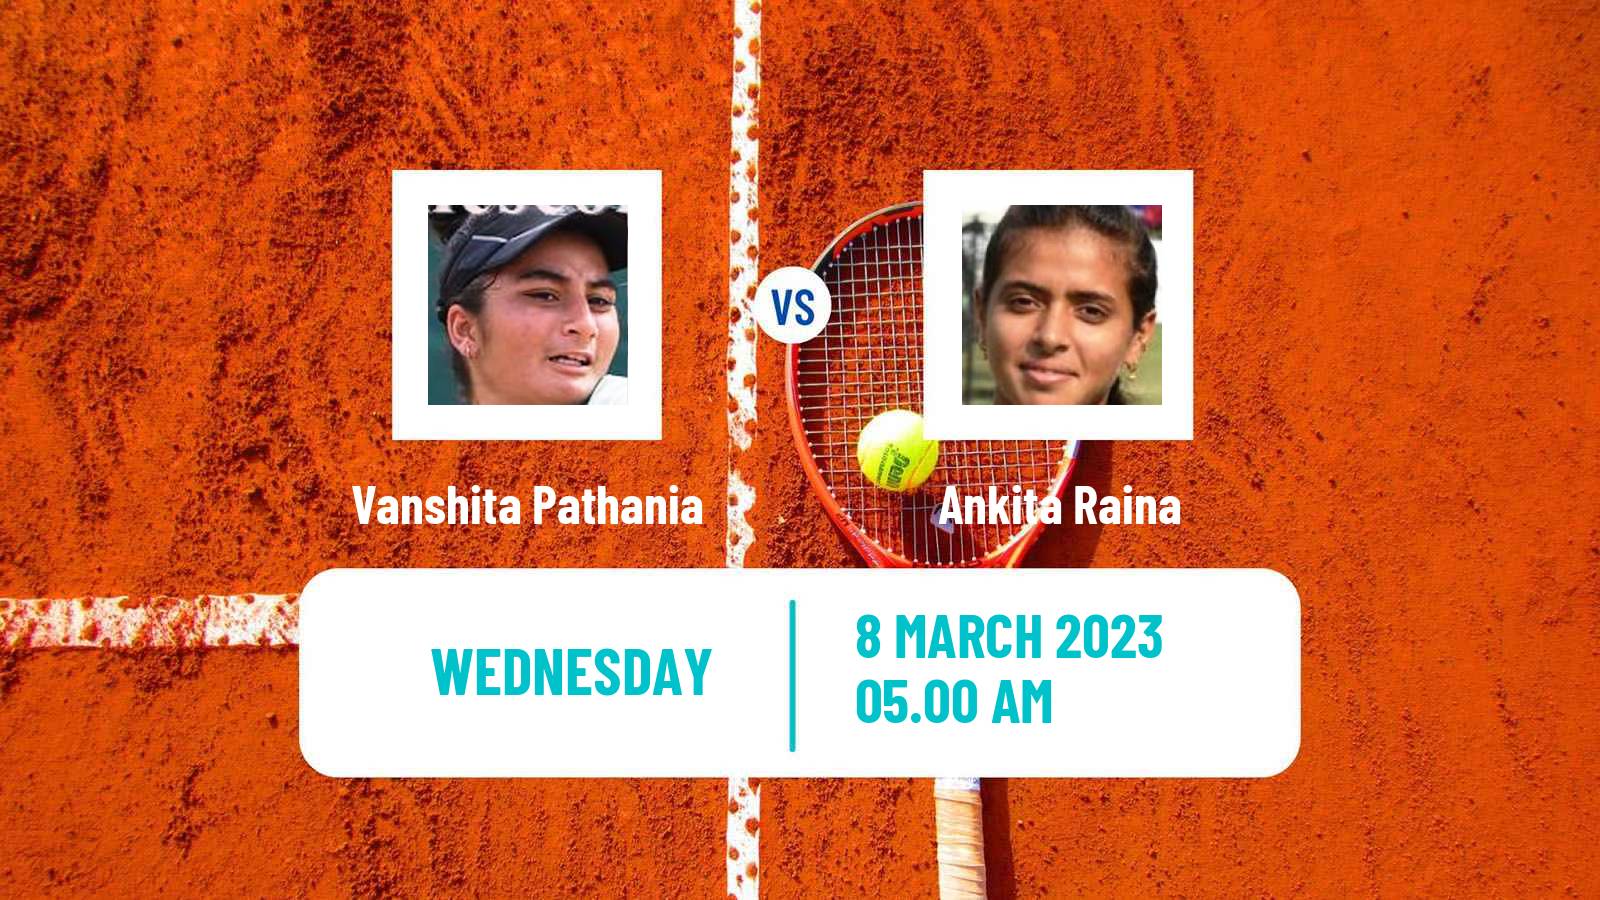 Tennis ITF Tournaments Vanshita Pathania - Ankita Raina